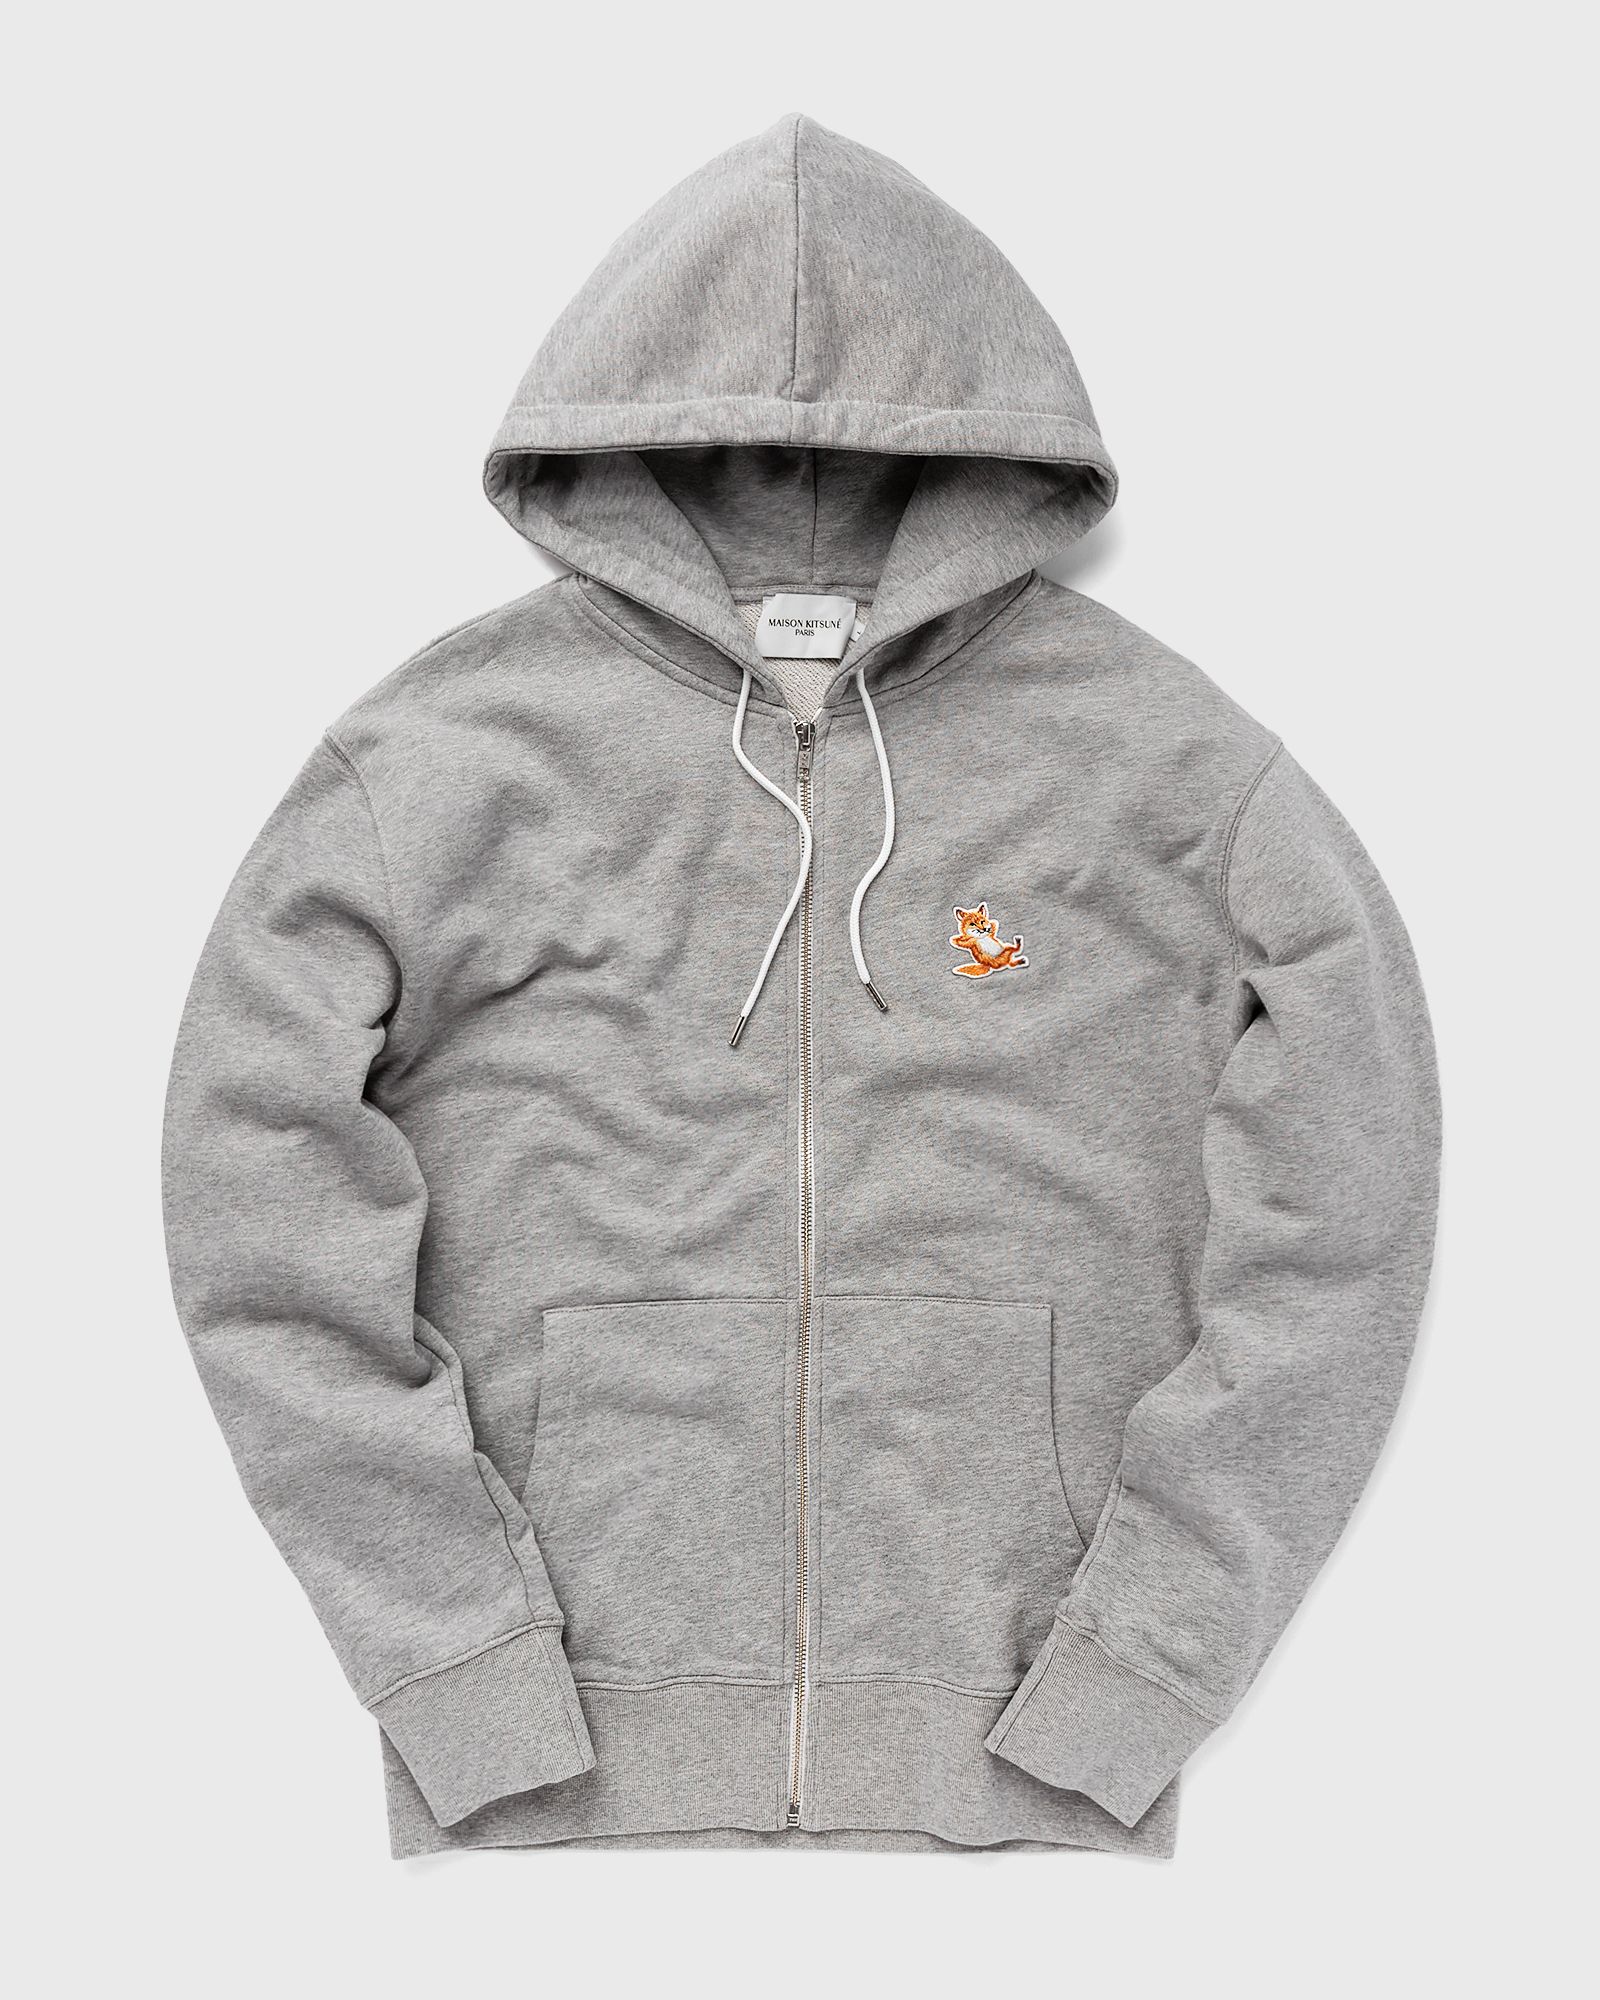 Maison Kitsune - chillax fox patch zipped hoodie men hoodies|zippers grey in größe:s